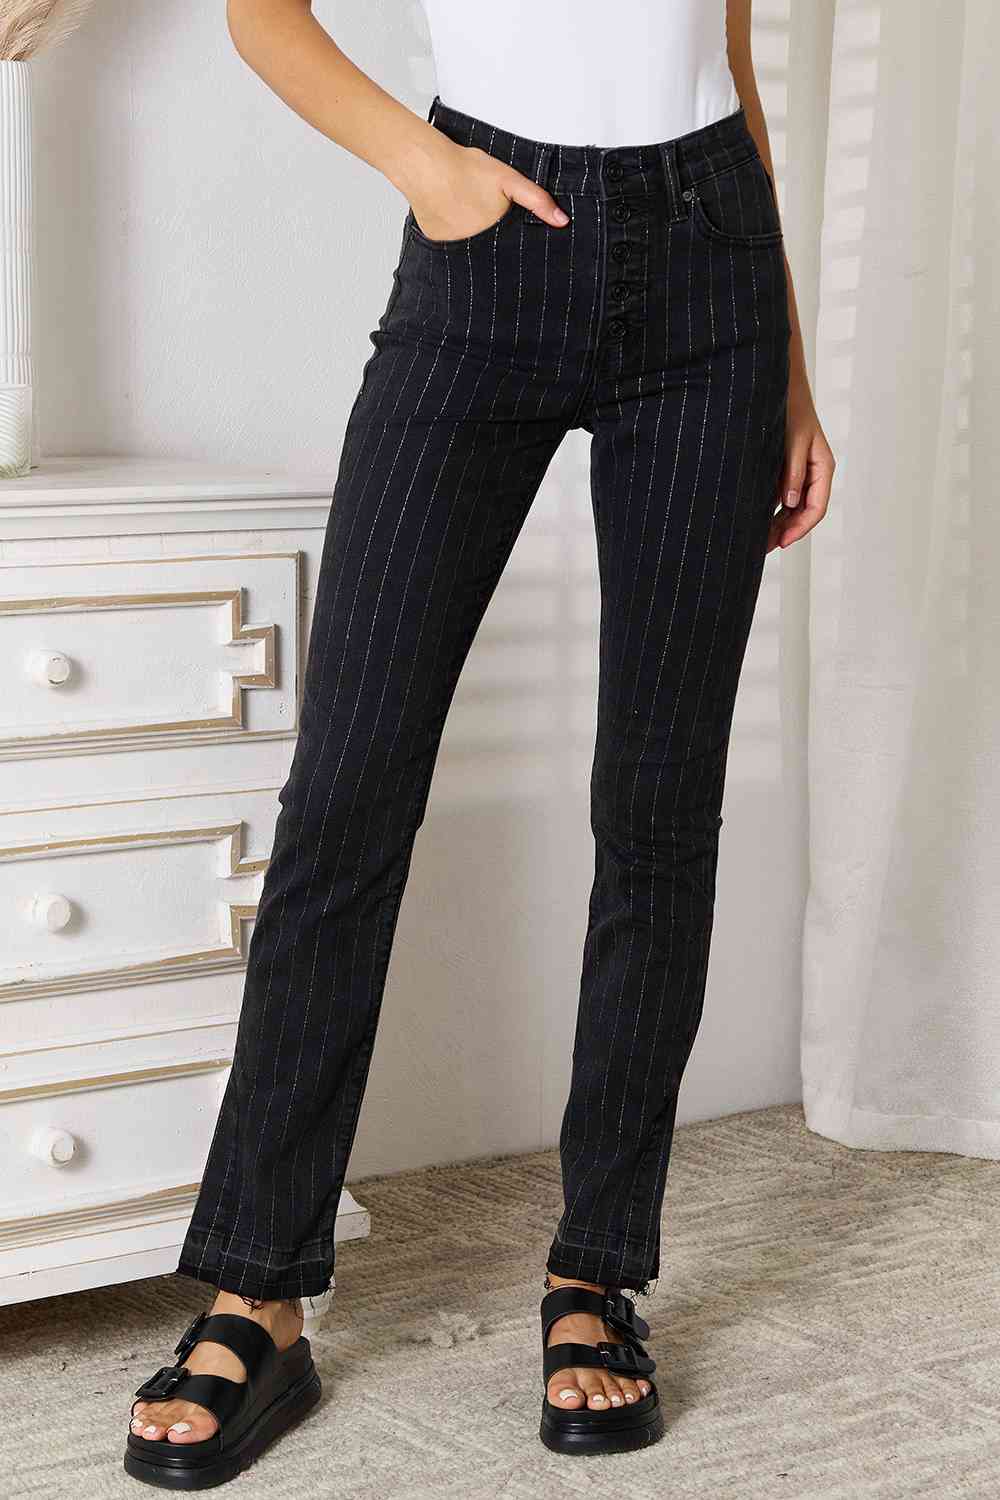 Striped Women Pants with Pockets | Fashionsarah.com